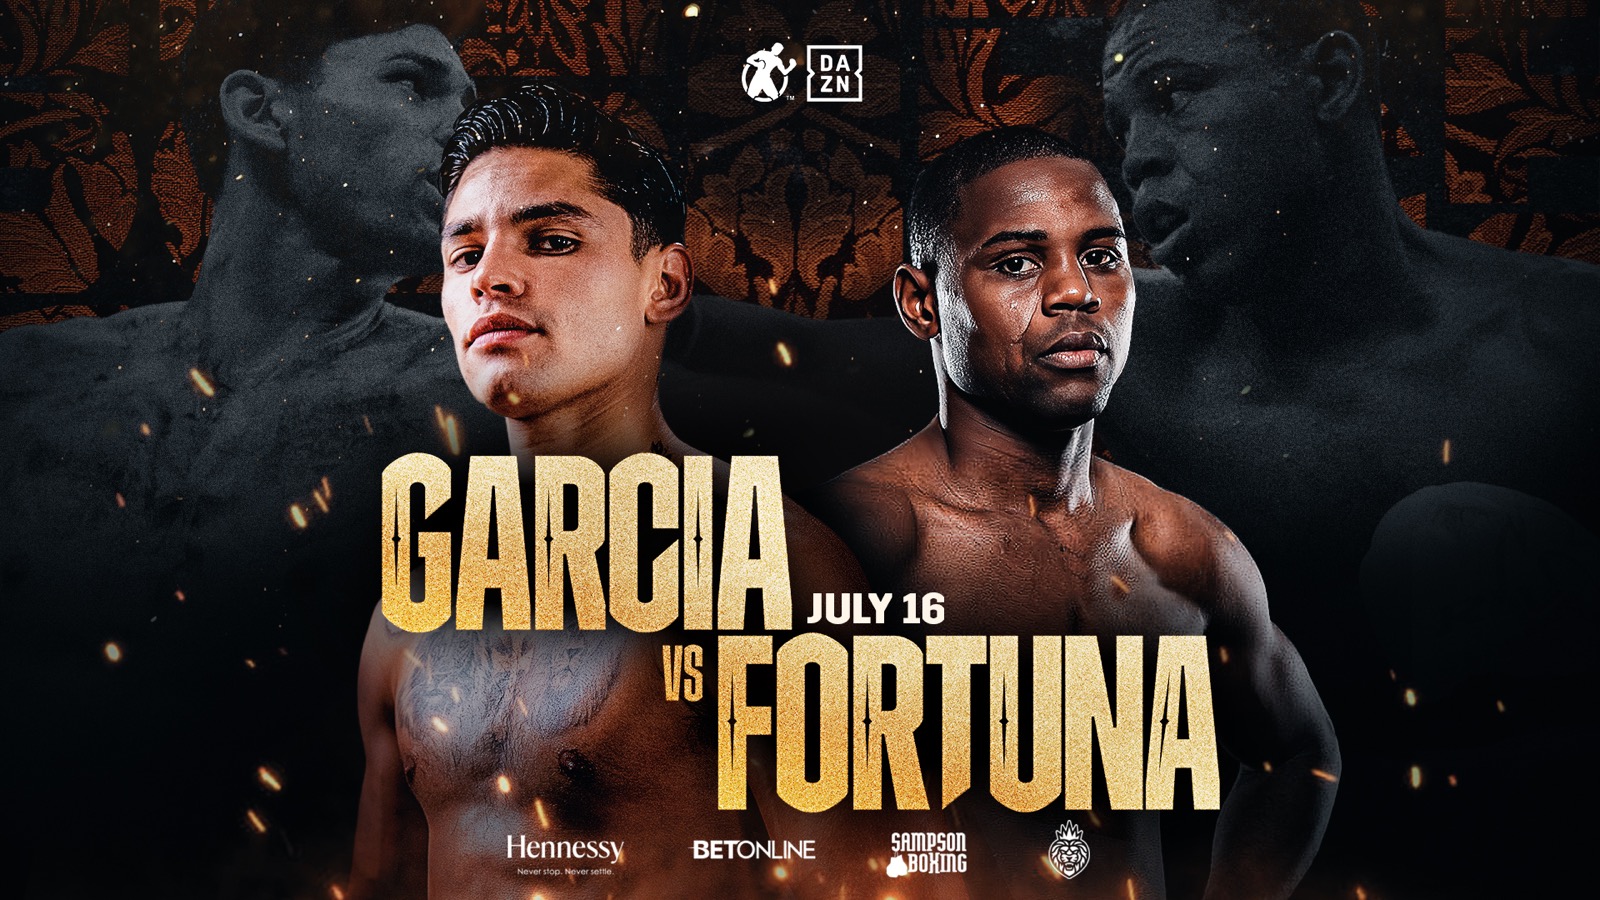 Ryan Garcia vs Fortuna at Crypto Arena in LA on July 16